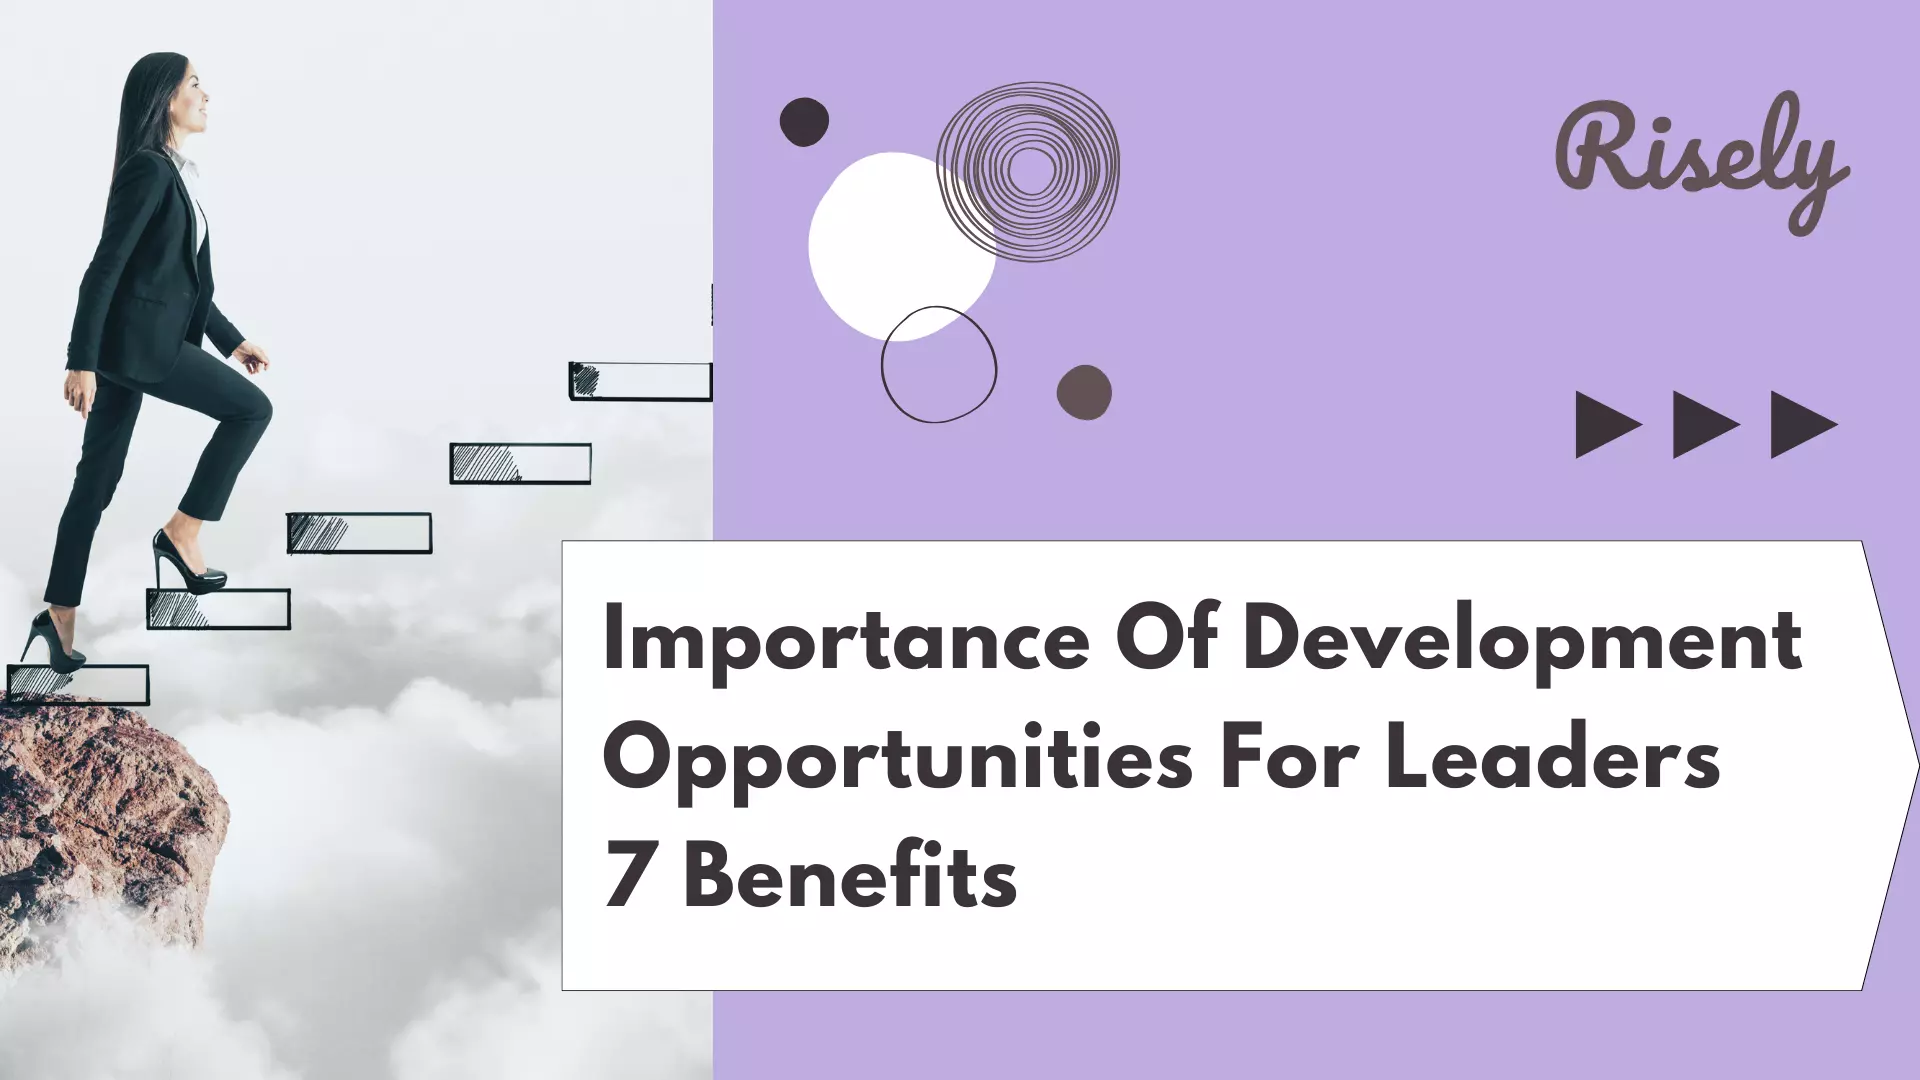 Development opportunities for leaders